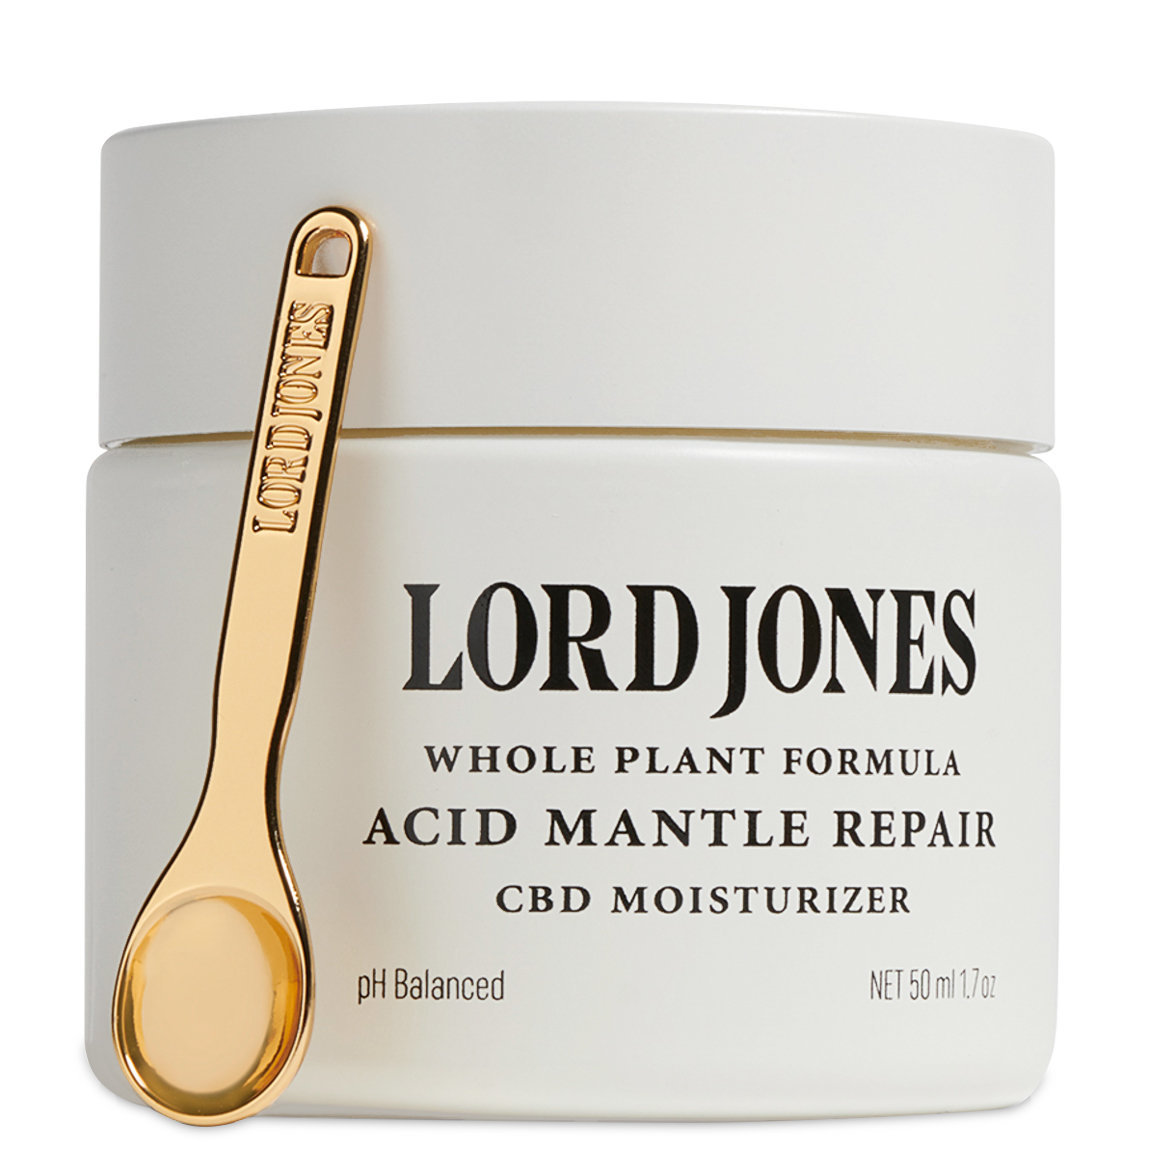 Lord Jones Acid Mantle Repair Facial Moisturizer alternative view 1 - product swatch.